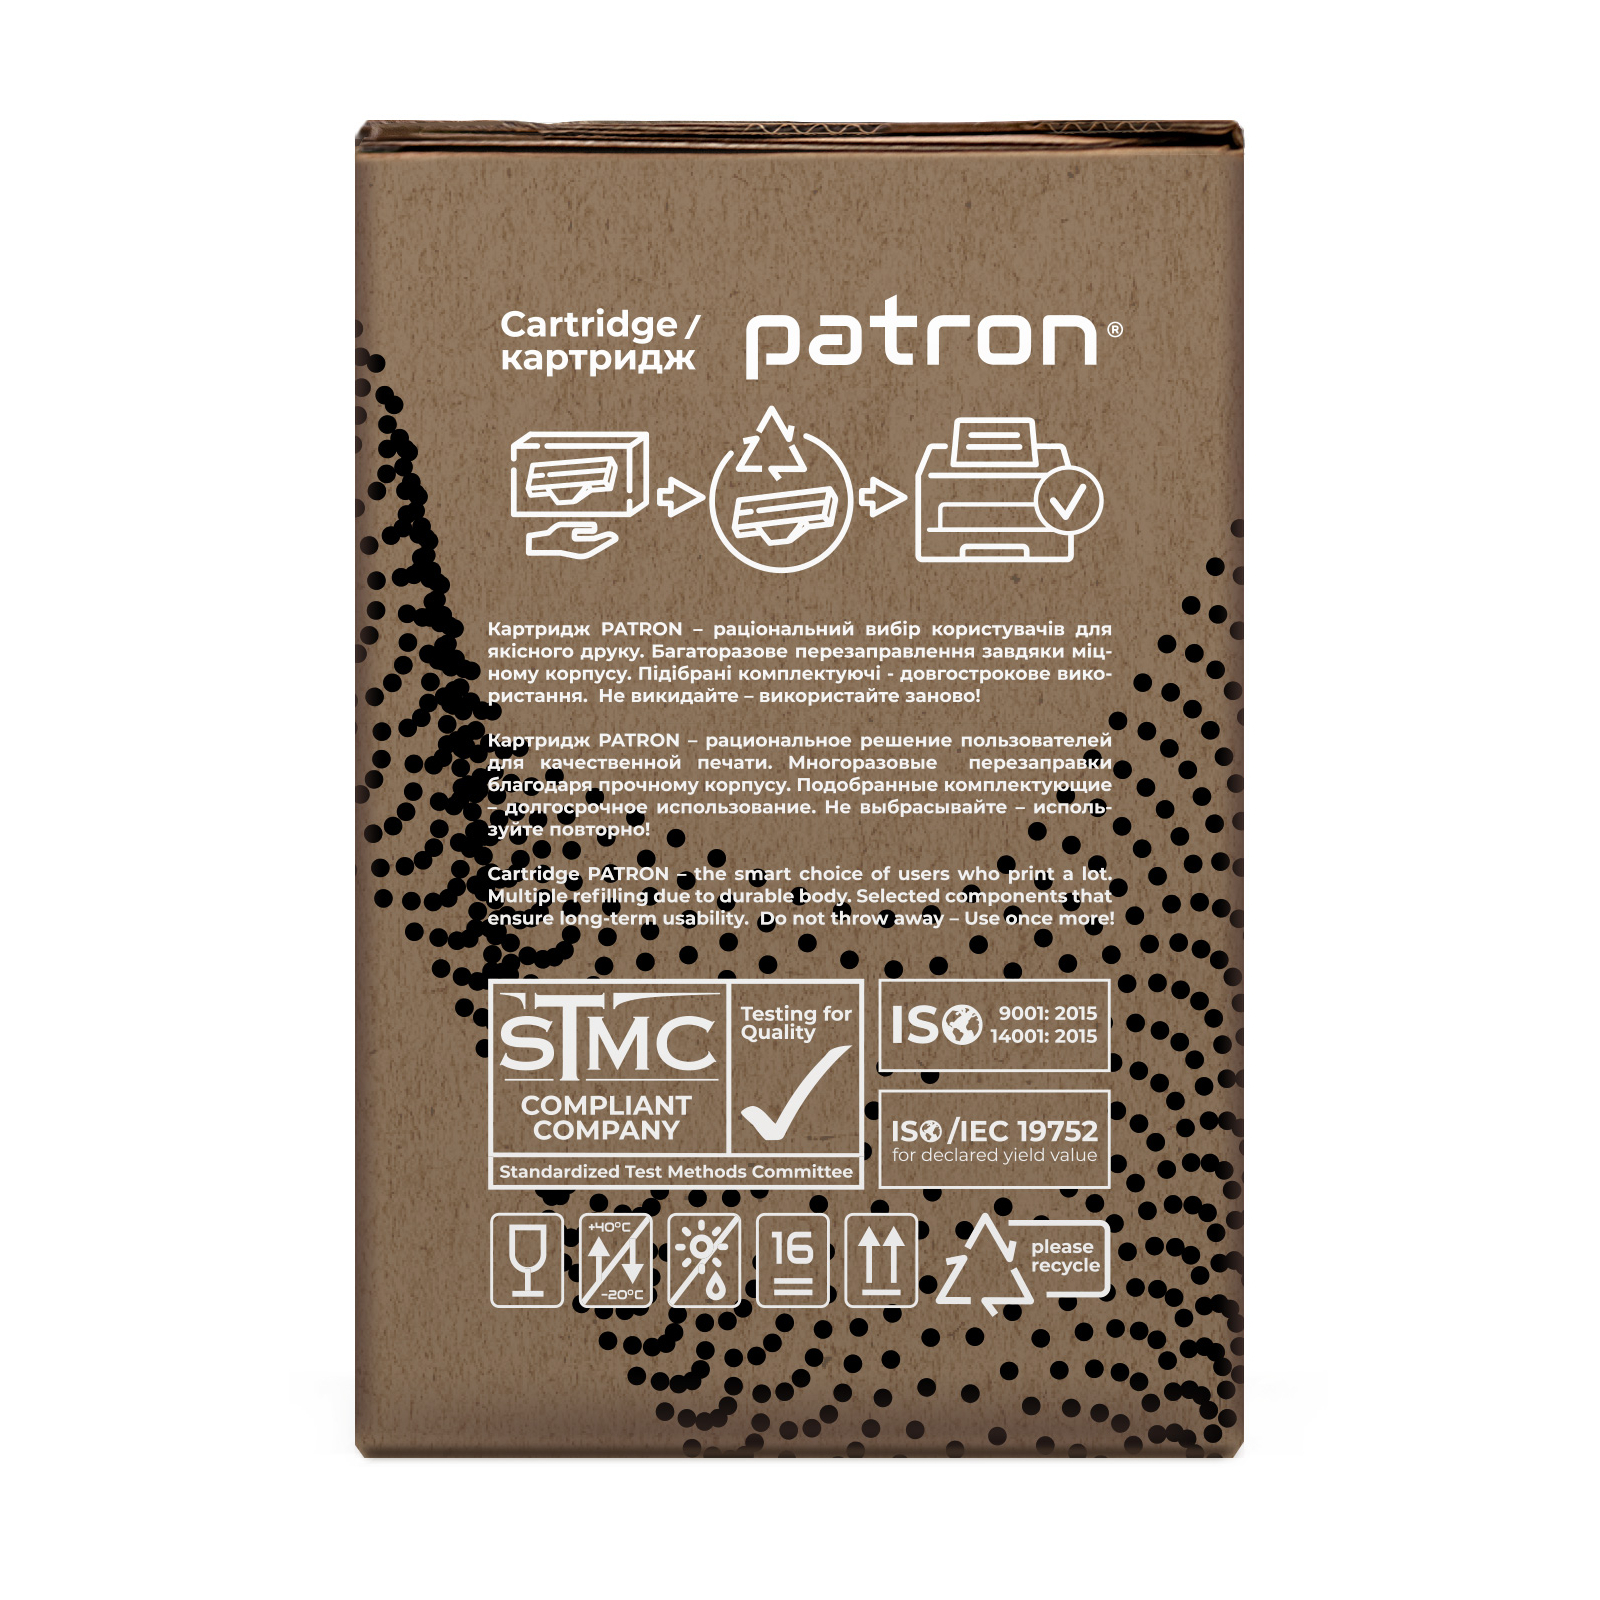 Картридж Patron CANON FX-10 GREEN Label (для MF4120/ 4140) (PN-FX10GL) изображение 4